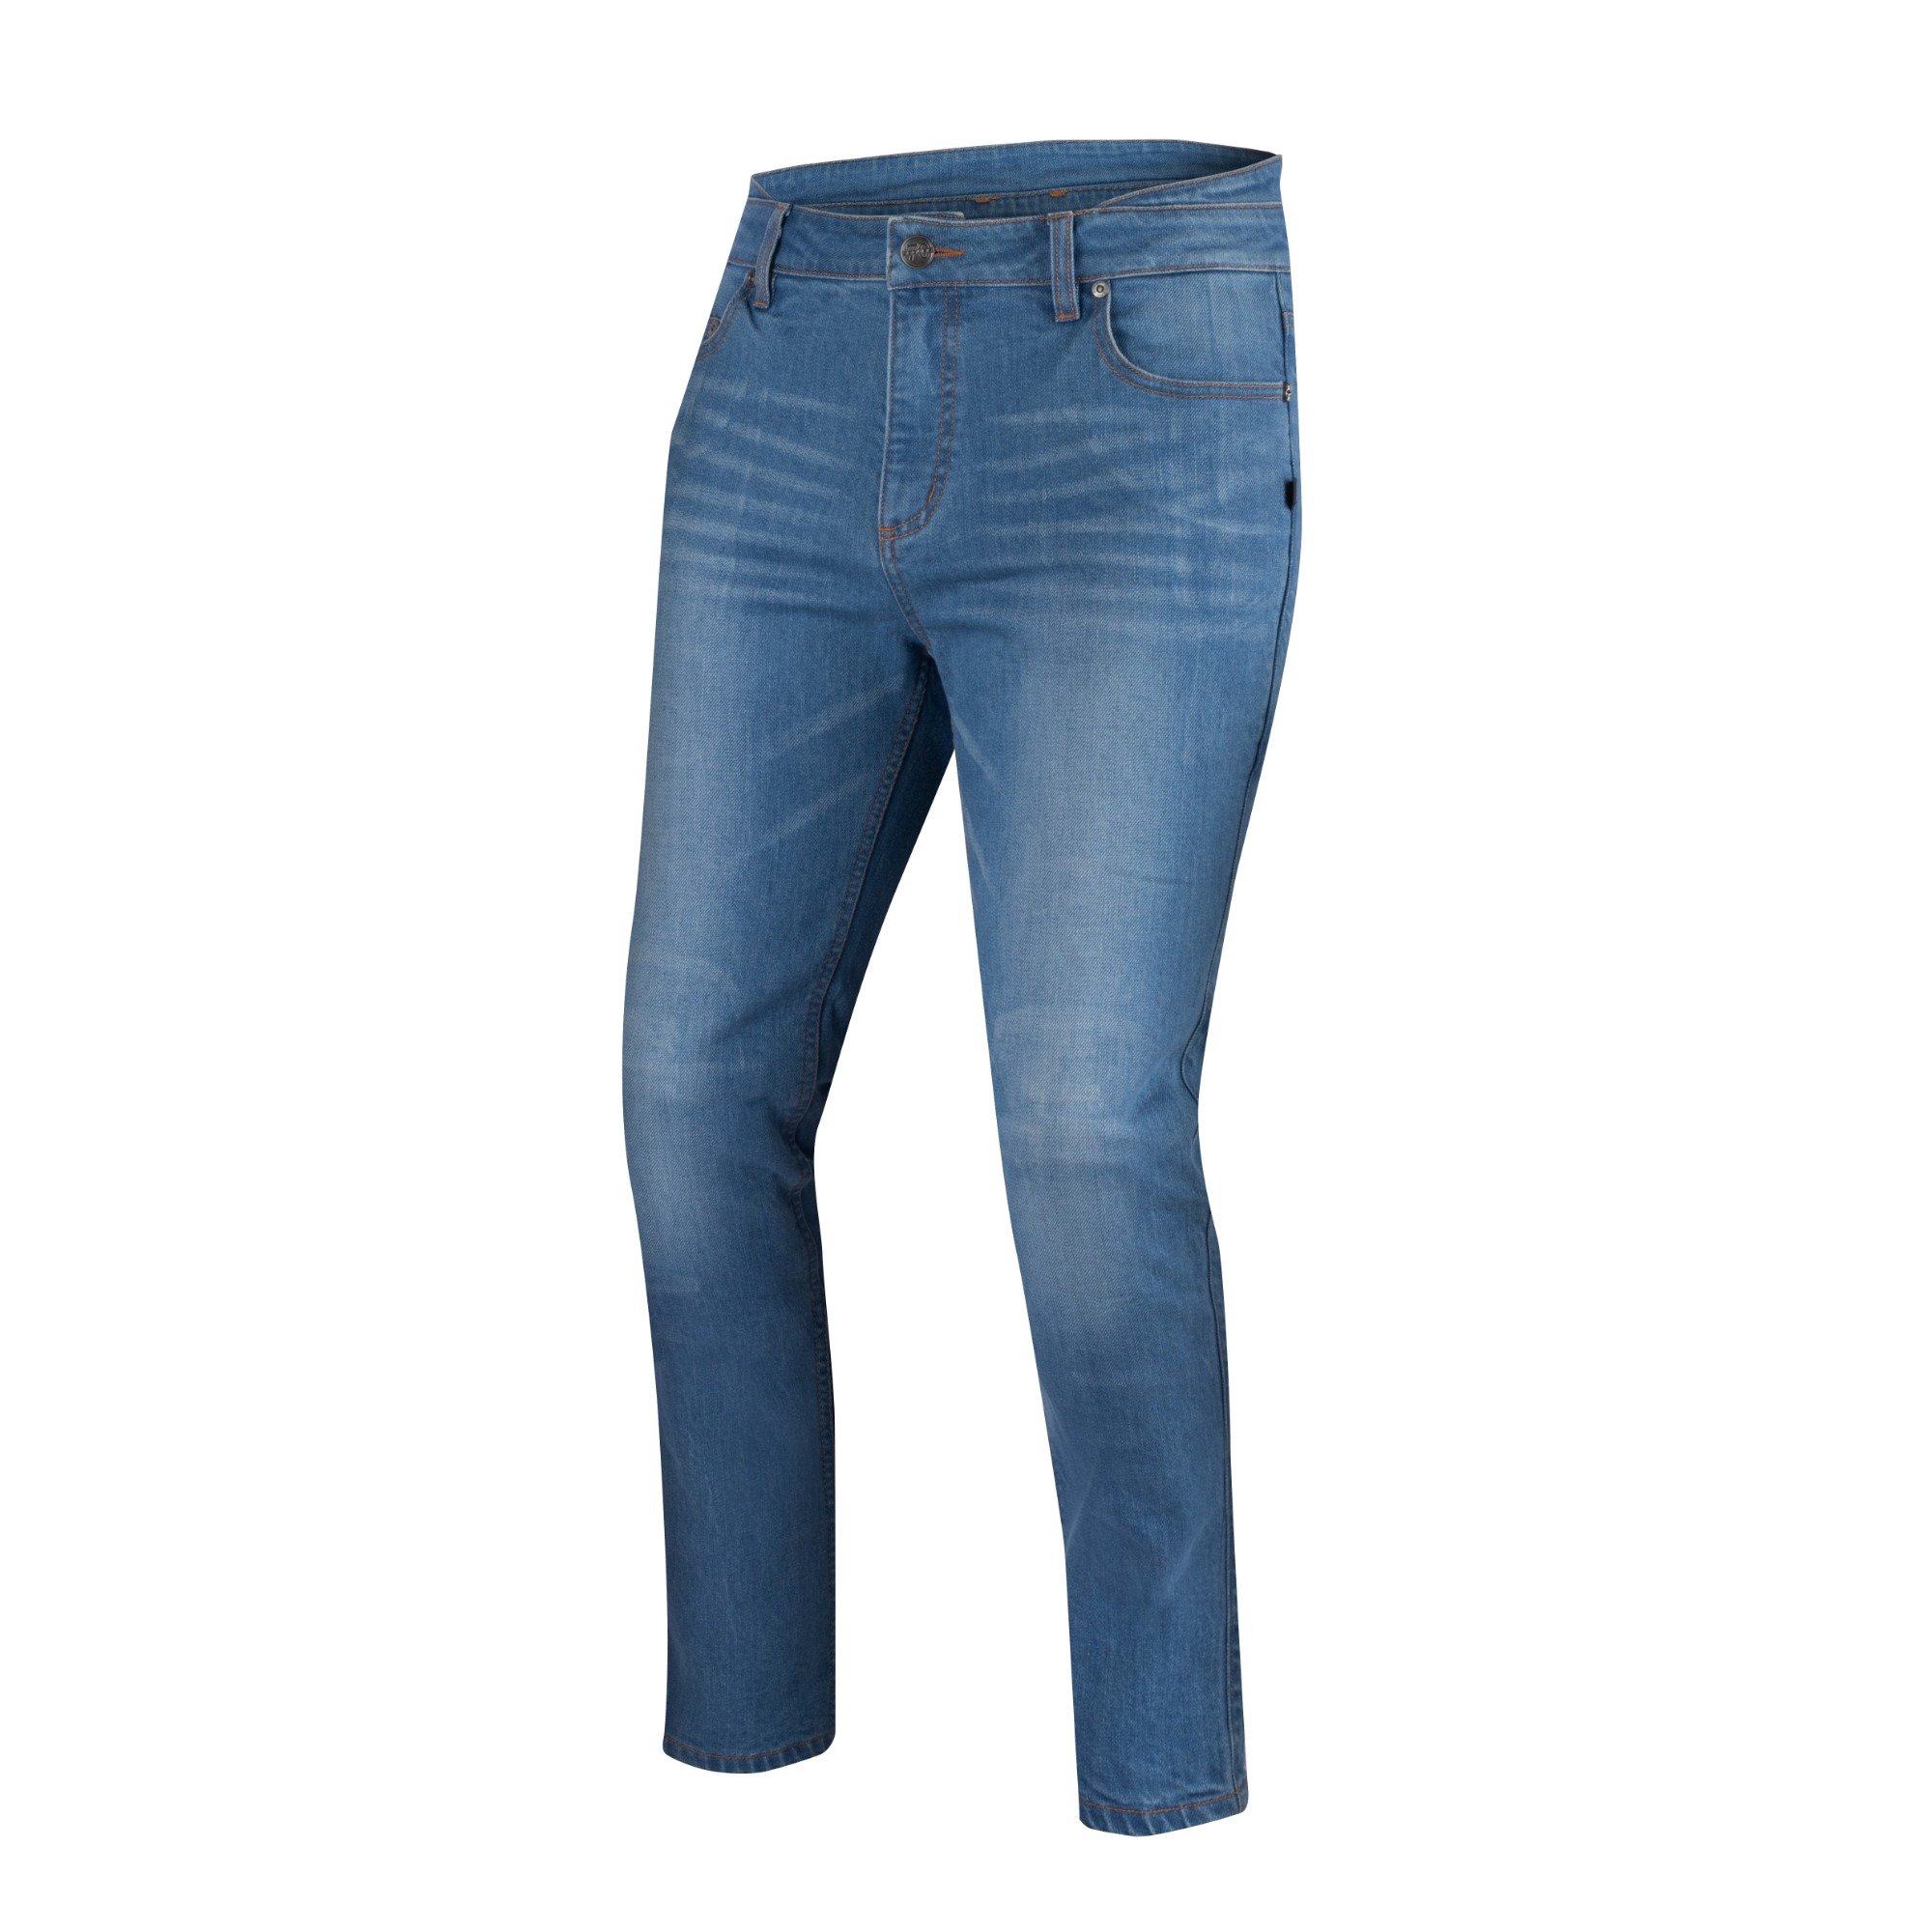 Image of Segura Trousers Rosco Blue Size S ID 3660815168080